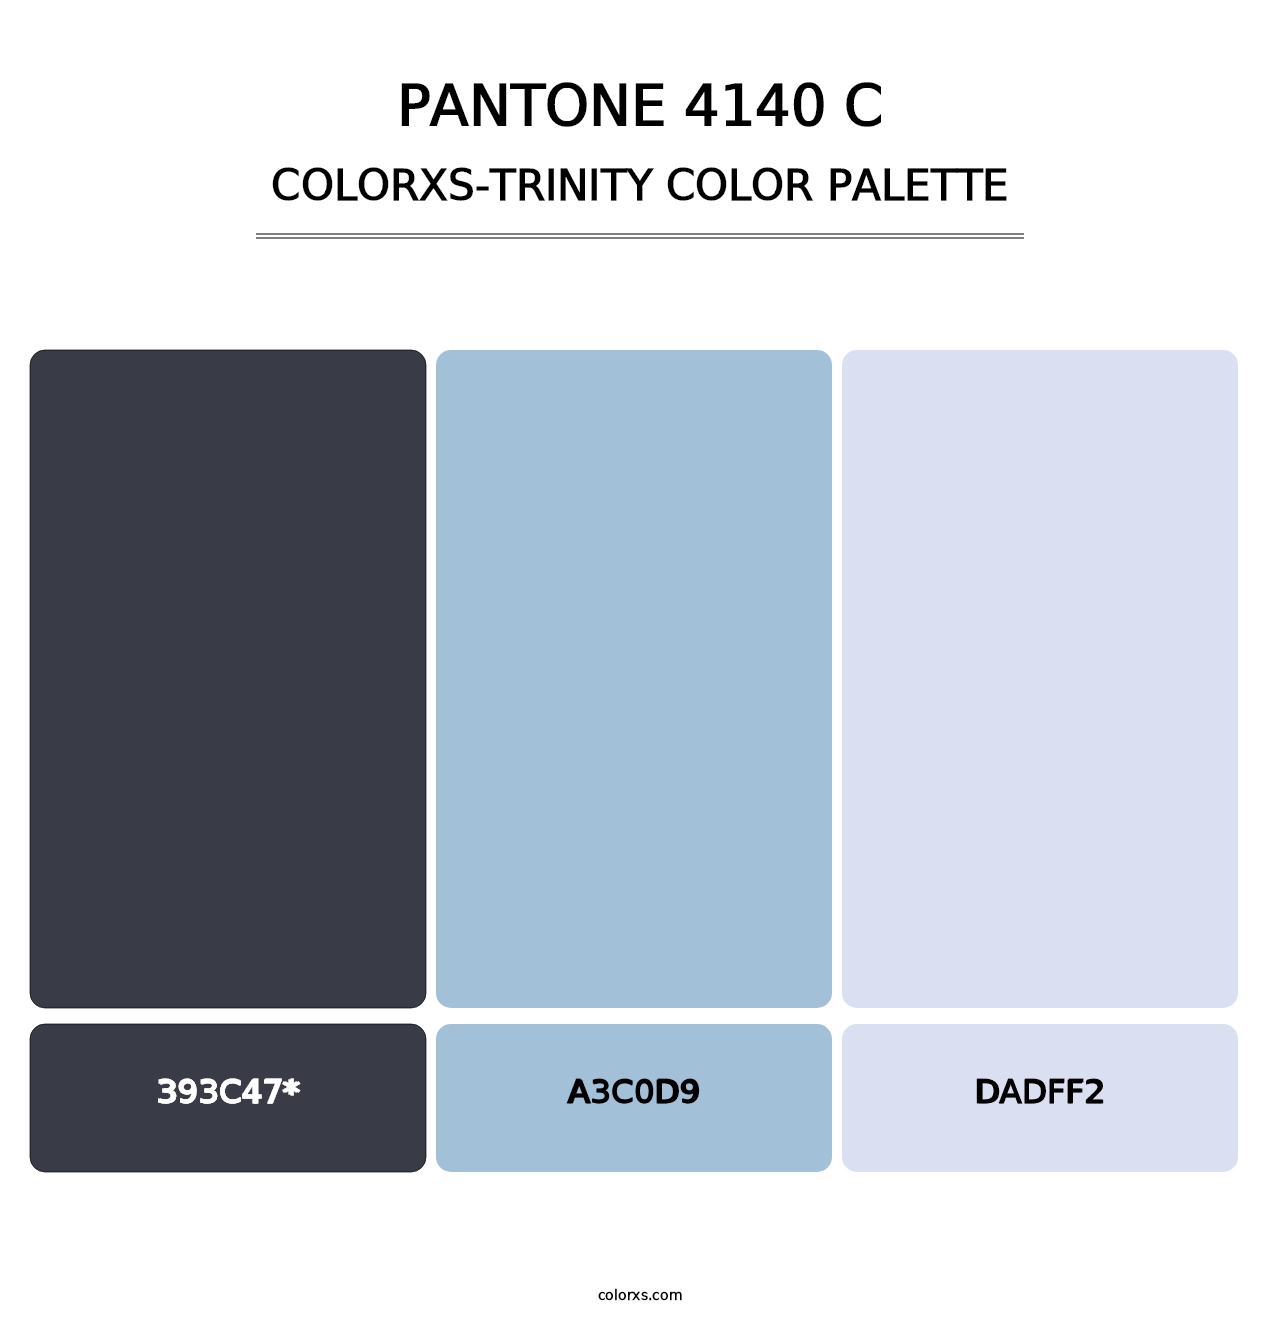 PANTONE 4140 C - Colorxs Trinity Palette